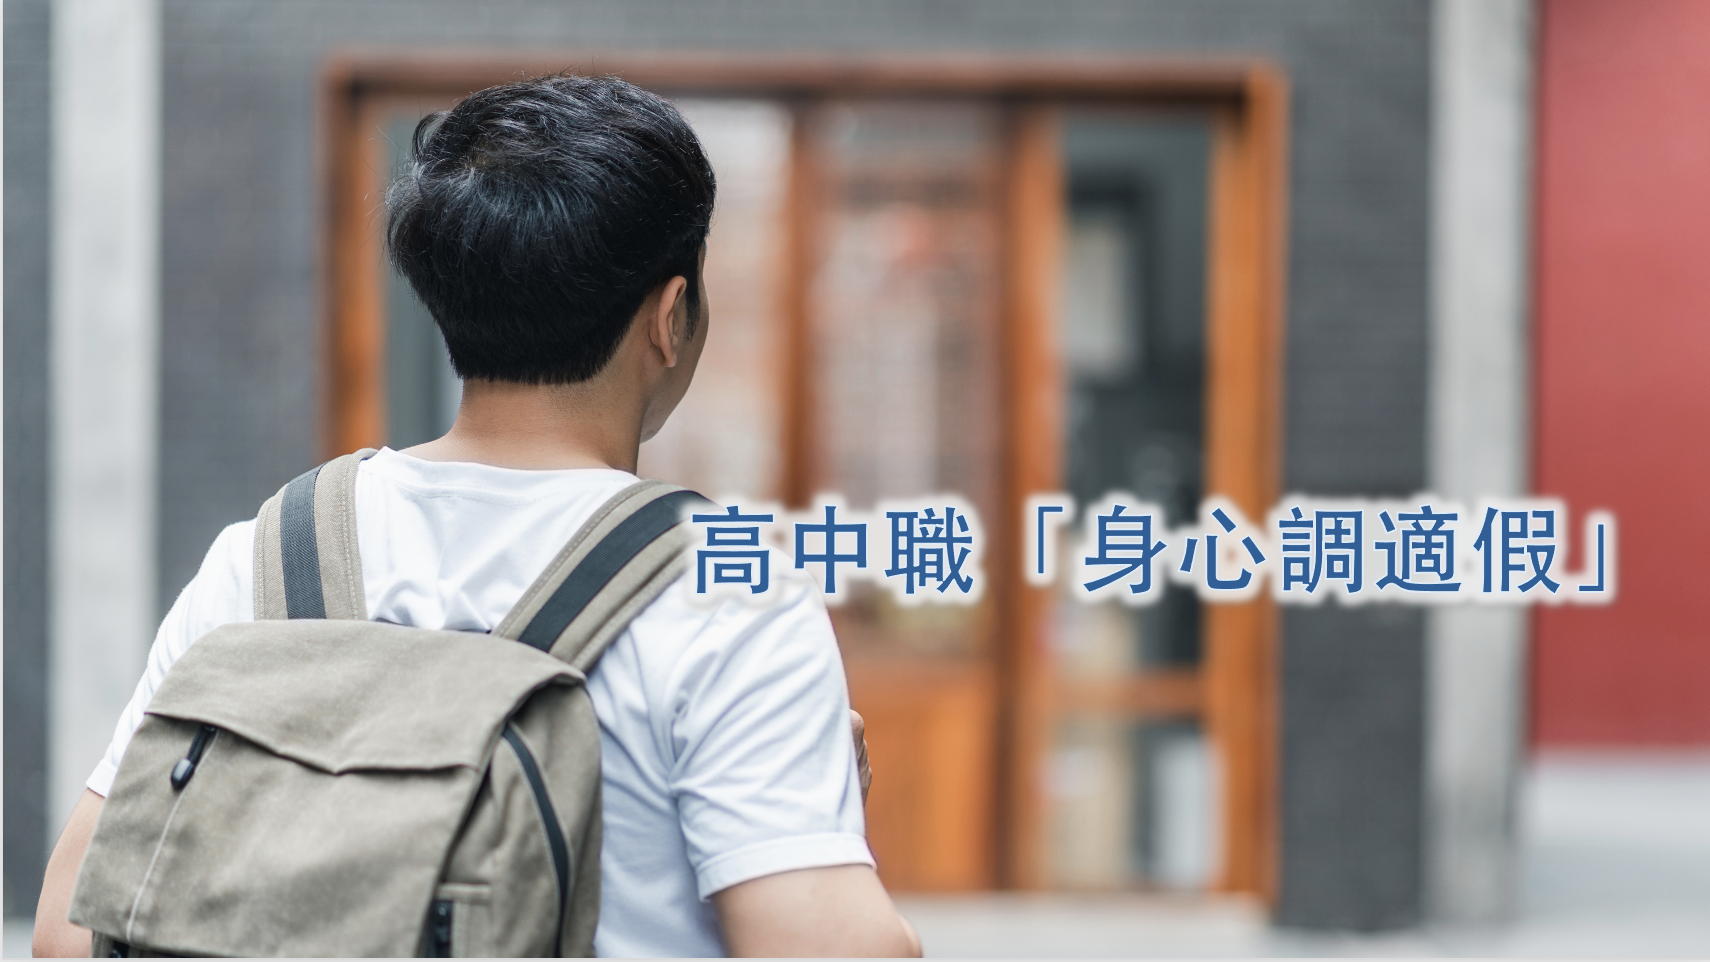 Kementerian Pendidikan mengumumkan revisi"Peraturan Evaluasi Pembelajaran Siswa Sekolah Menengah Kejuruan" pada 1 Juli 2024. (Gambar: Tim Editor Tionghoa Medis)